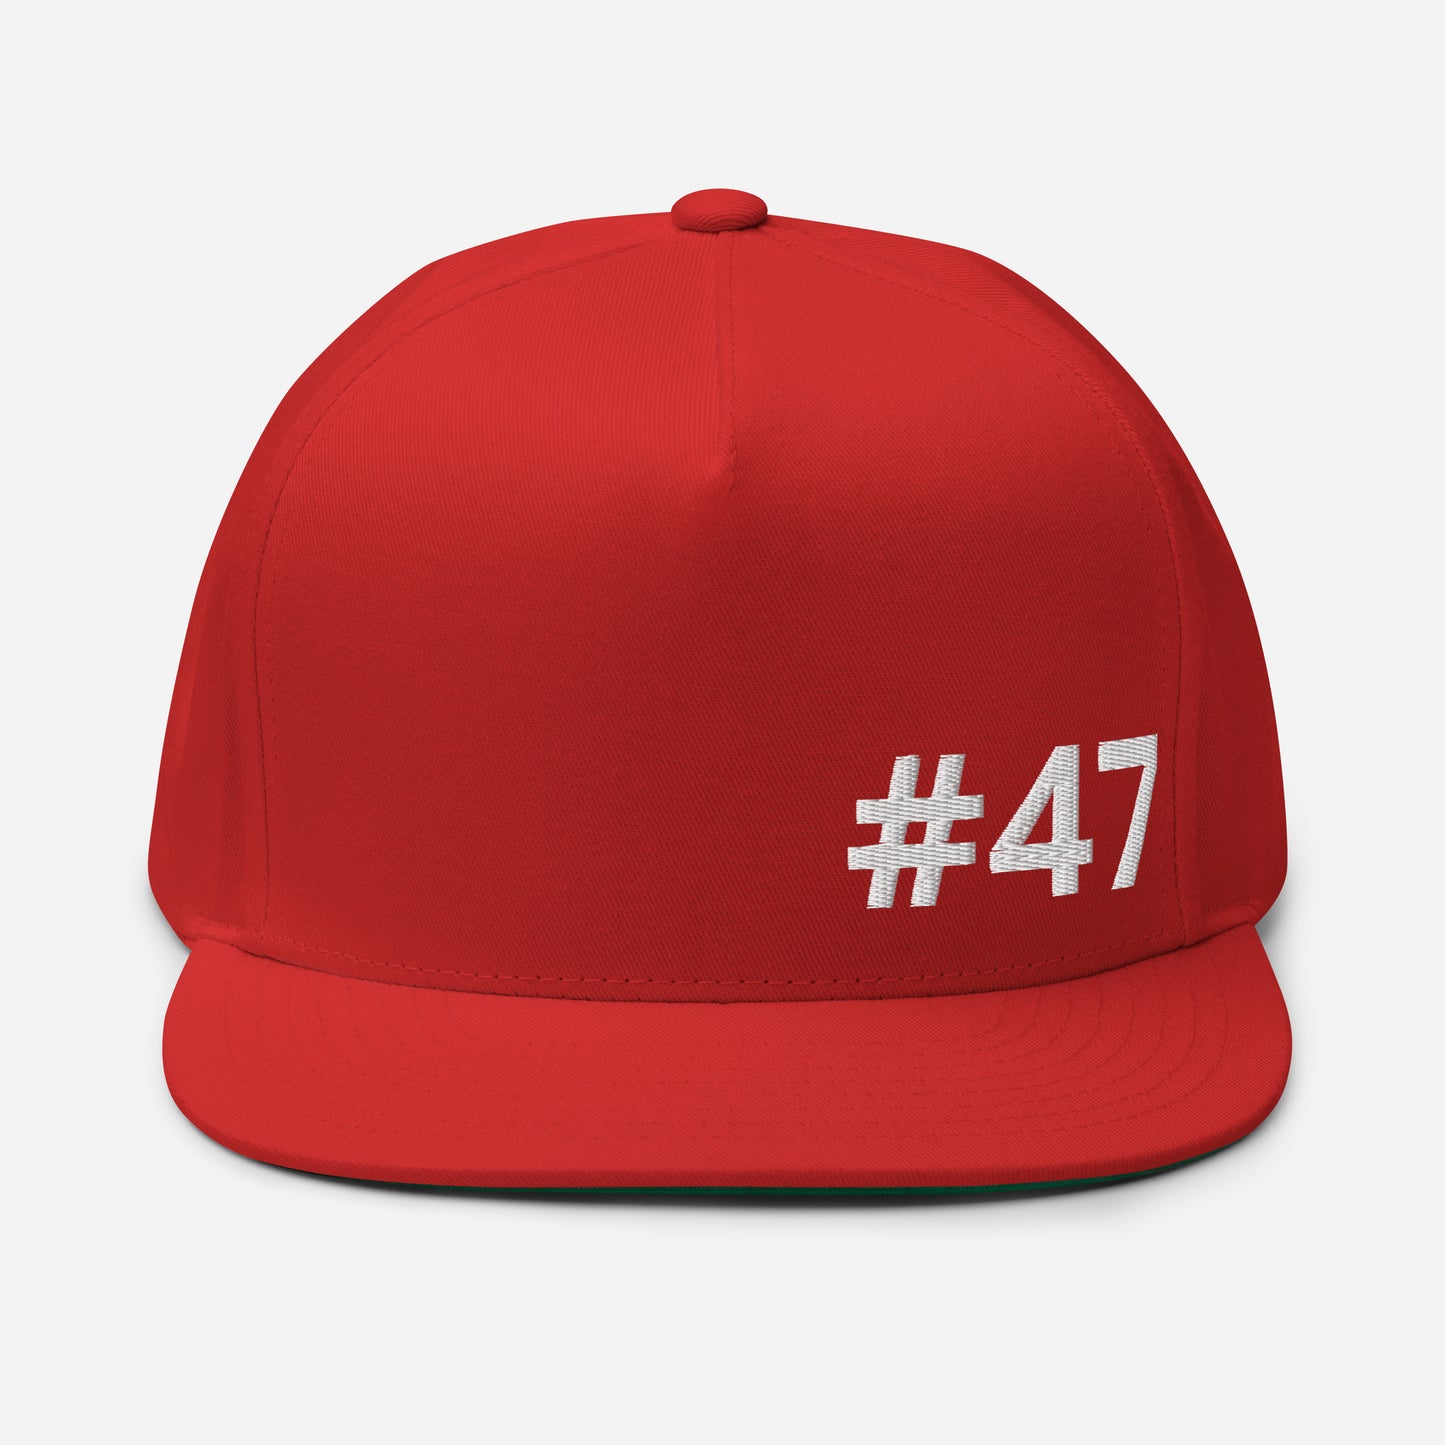 #47 Snapback "Style B" Flat Bill Cap